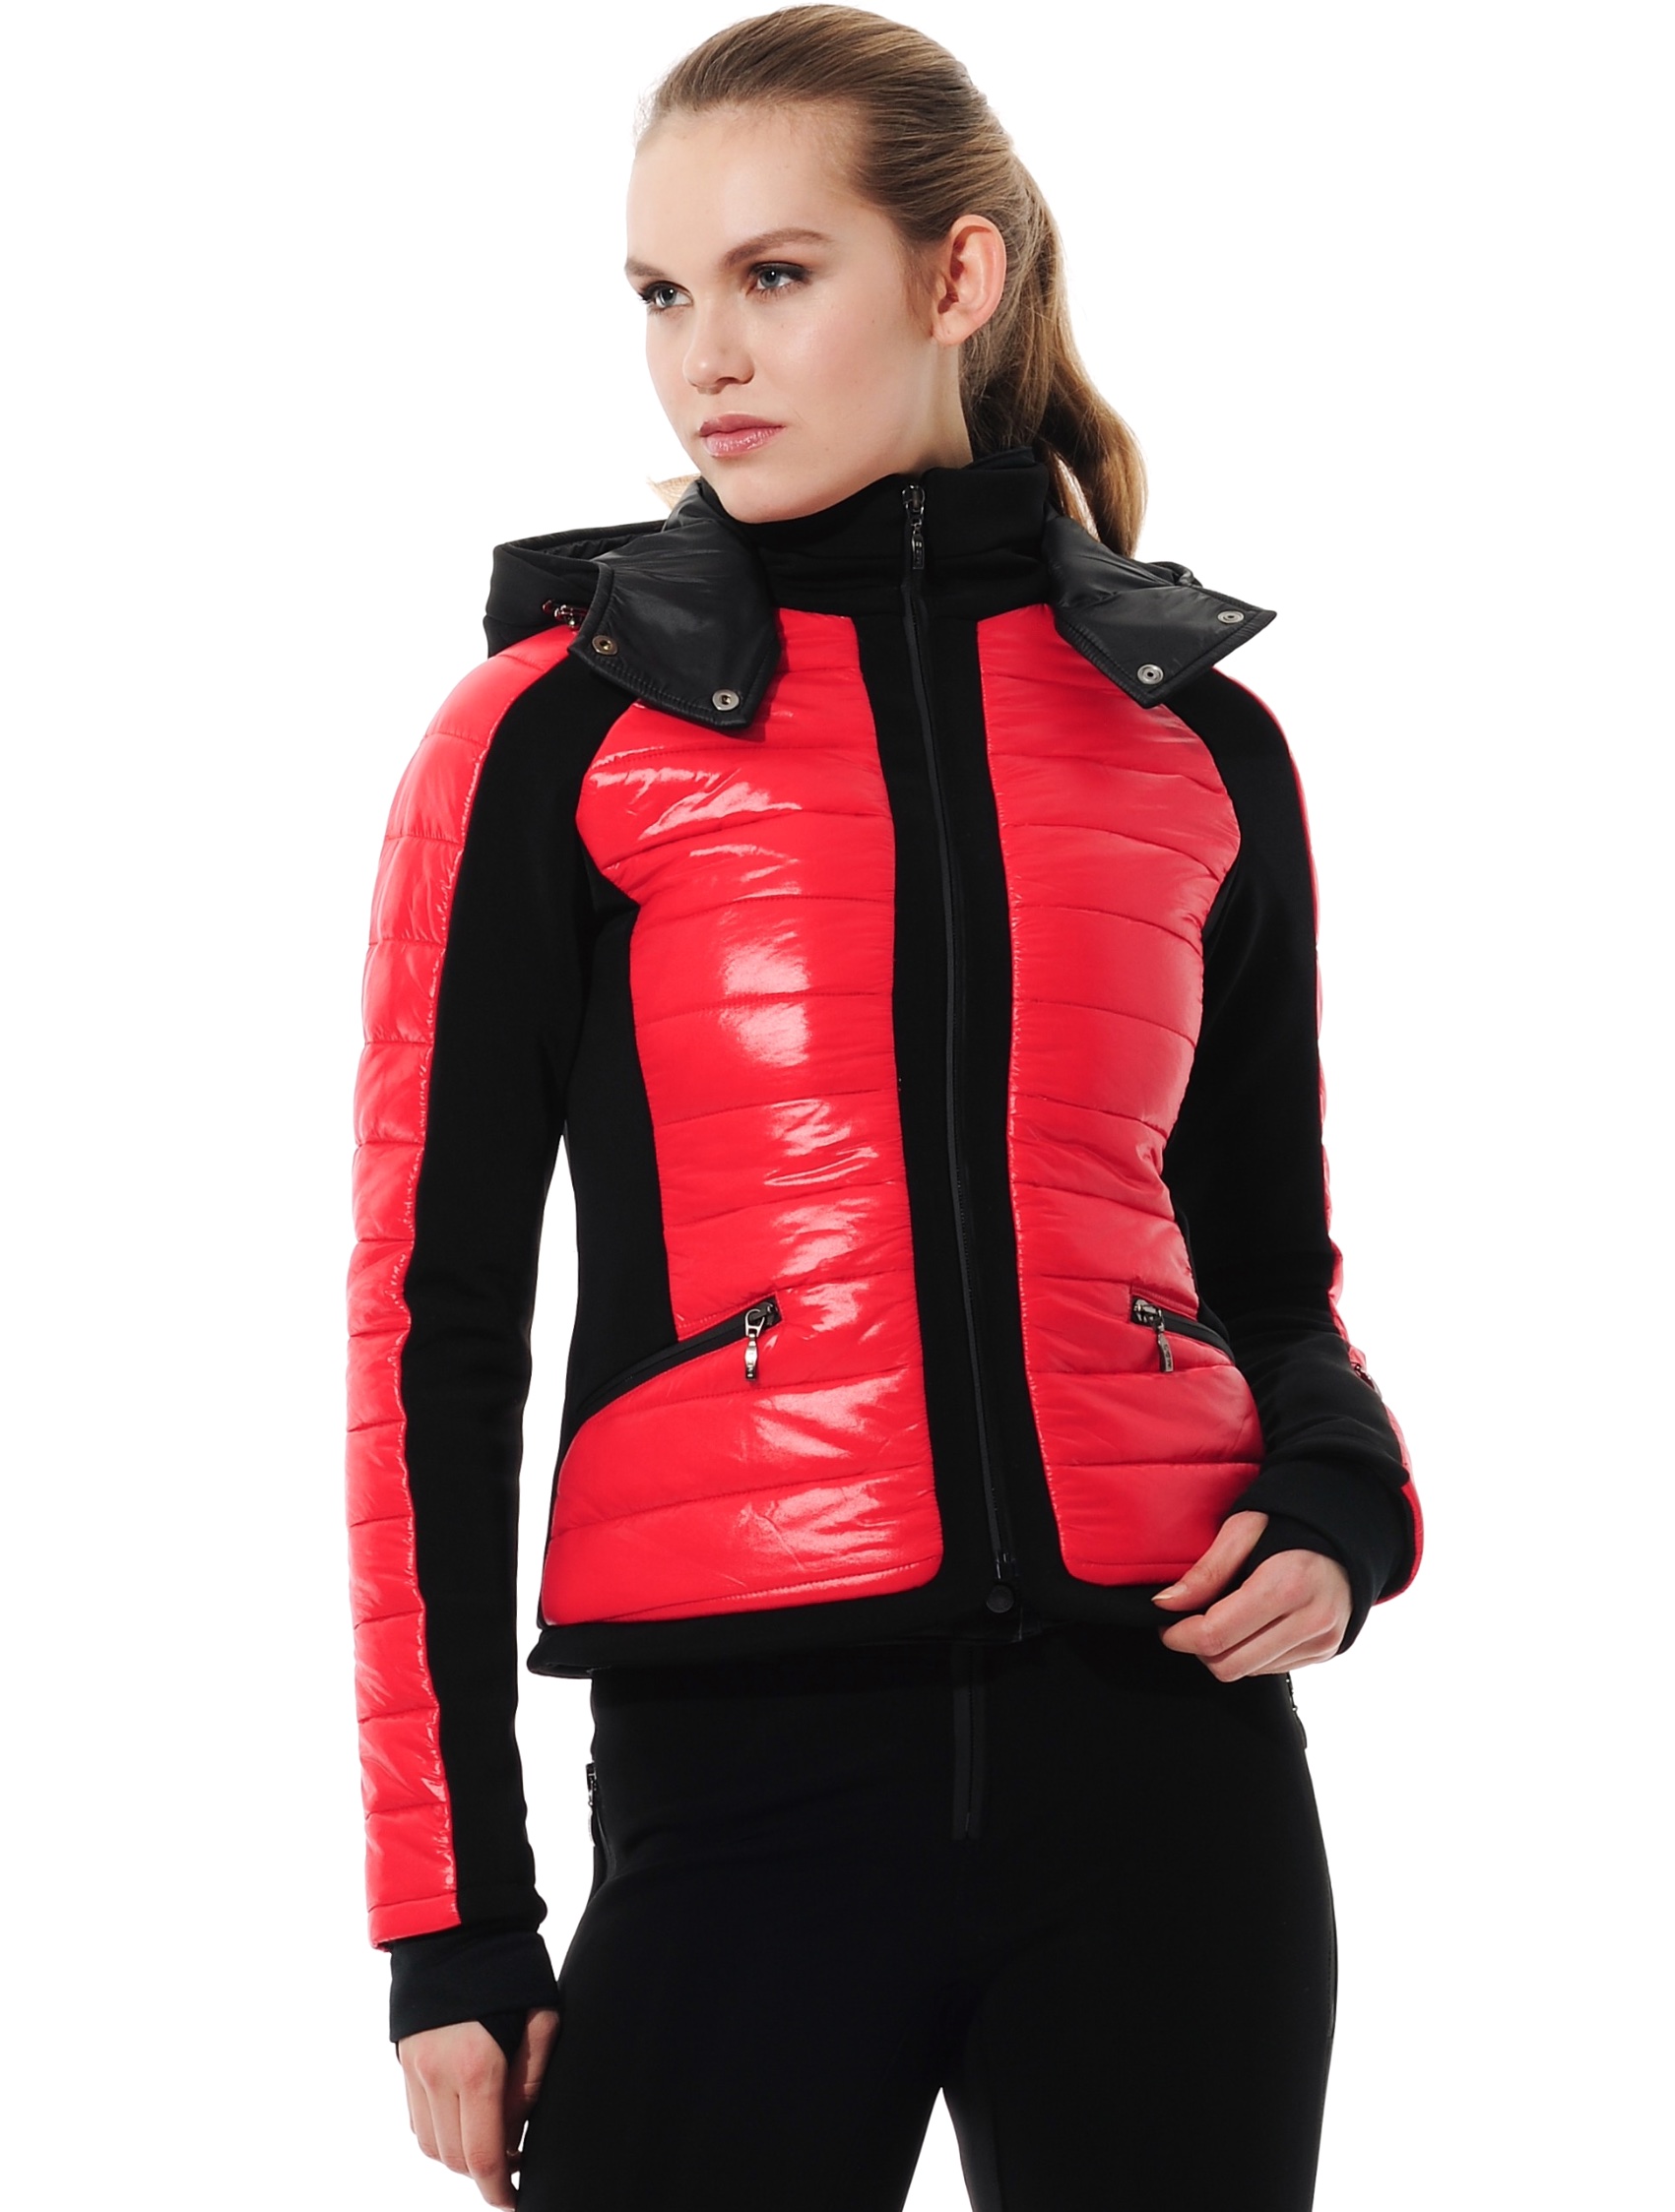 ski jacket red/black 